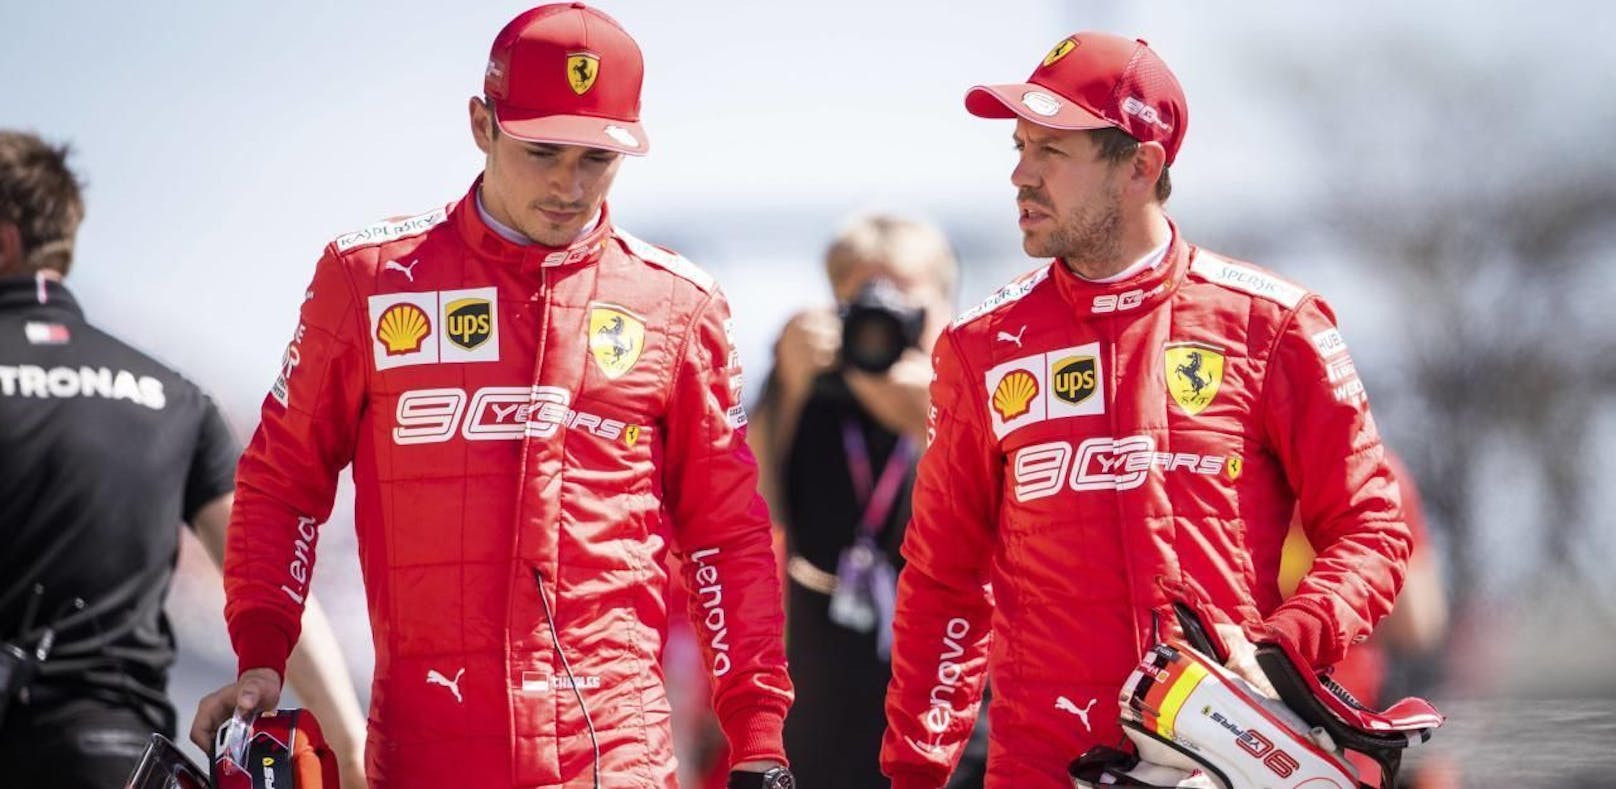 Charles Leclerc setzt Team-Kollegen Sebastian Vettel bei dessen Heim-Grand-Prix unter Druck.